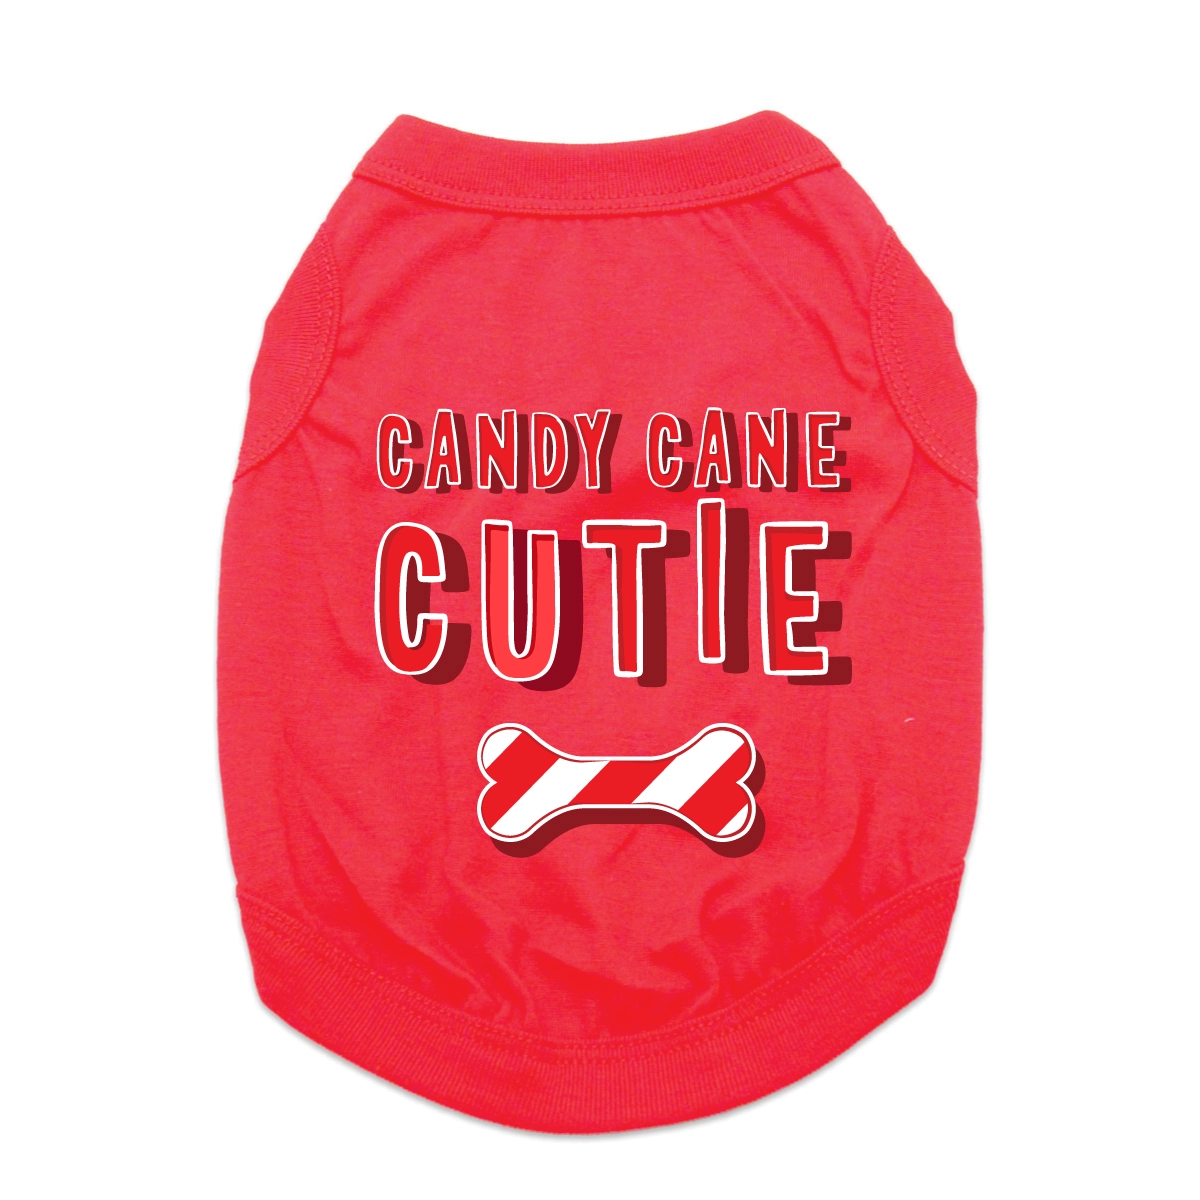 Candy Cane Cutie Dog Shirt - Red